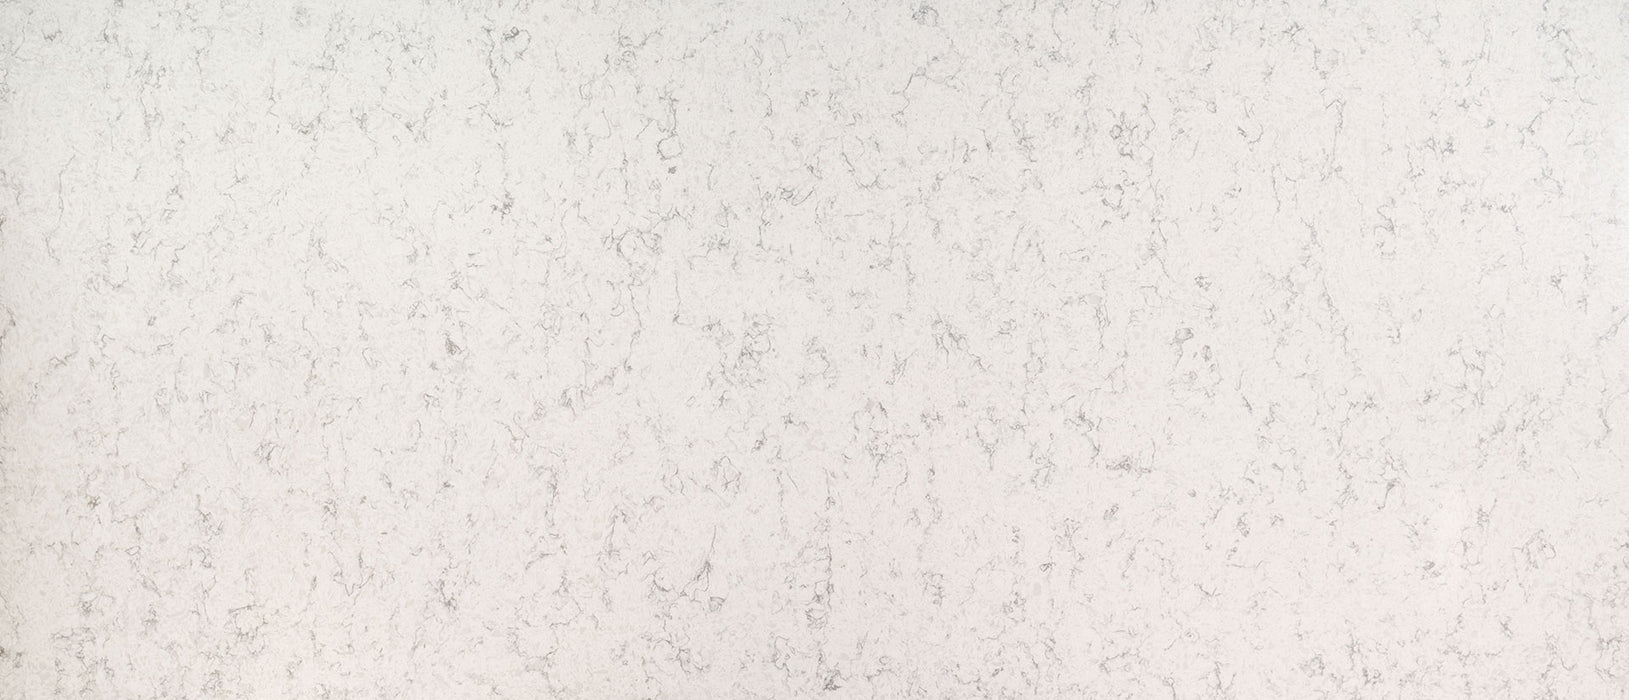 Mara Blanca quartz countertop slab